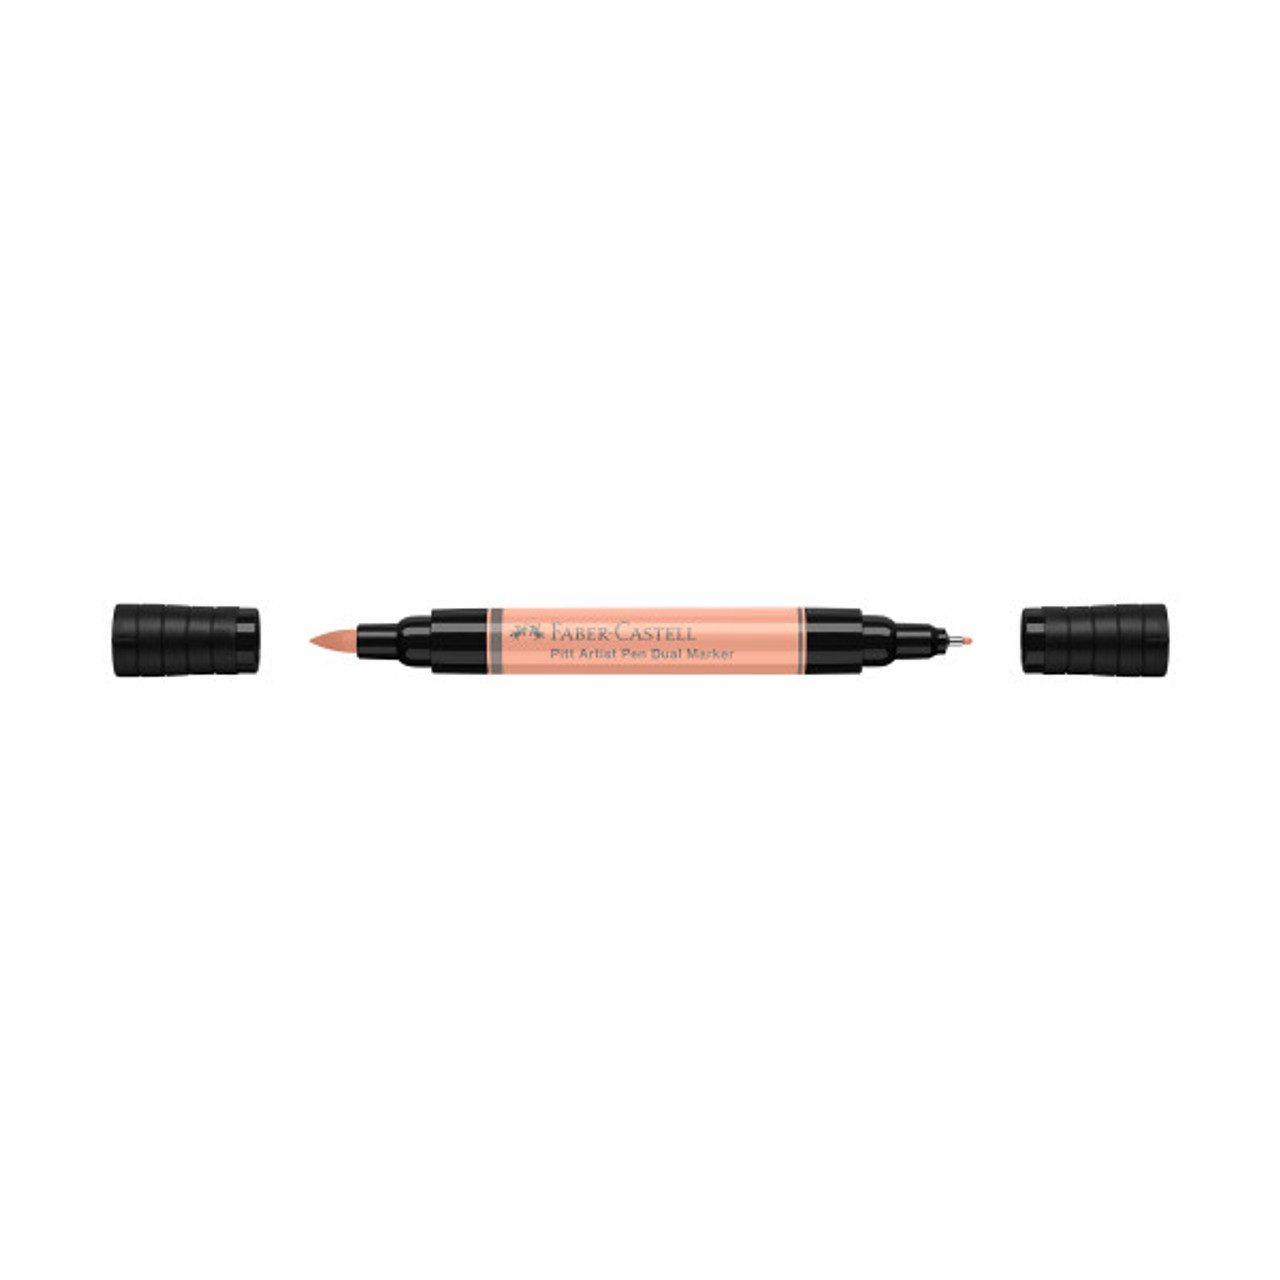 132 Beige Red - Buy 4, Get 1 Free - Pitt Artist Pen Dual Marker - Faber Castell